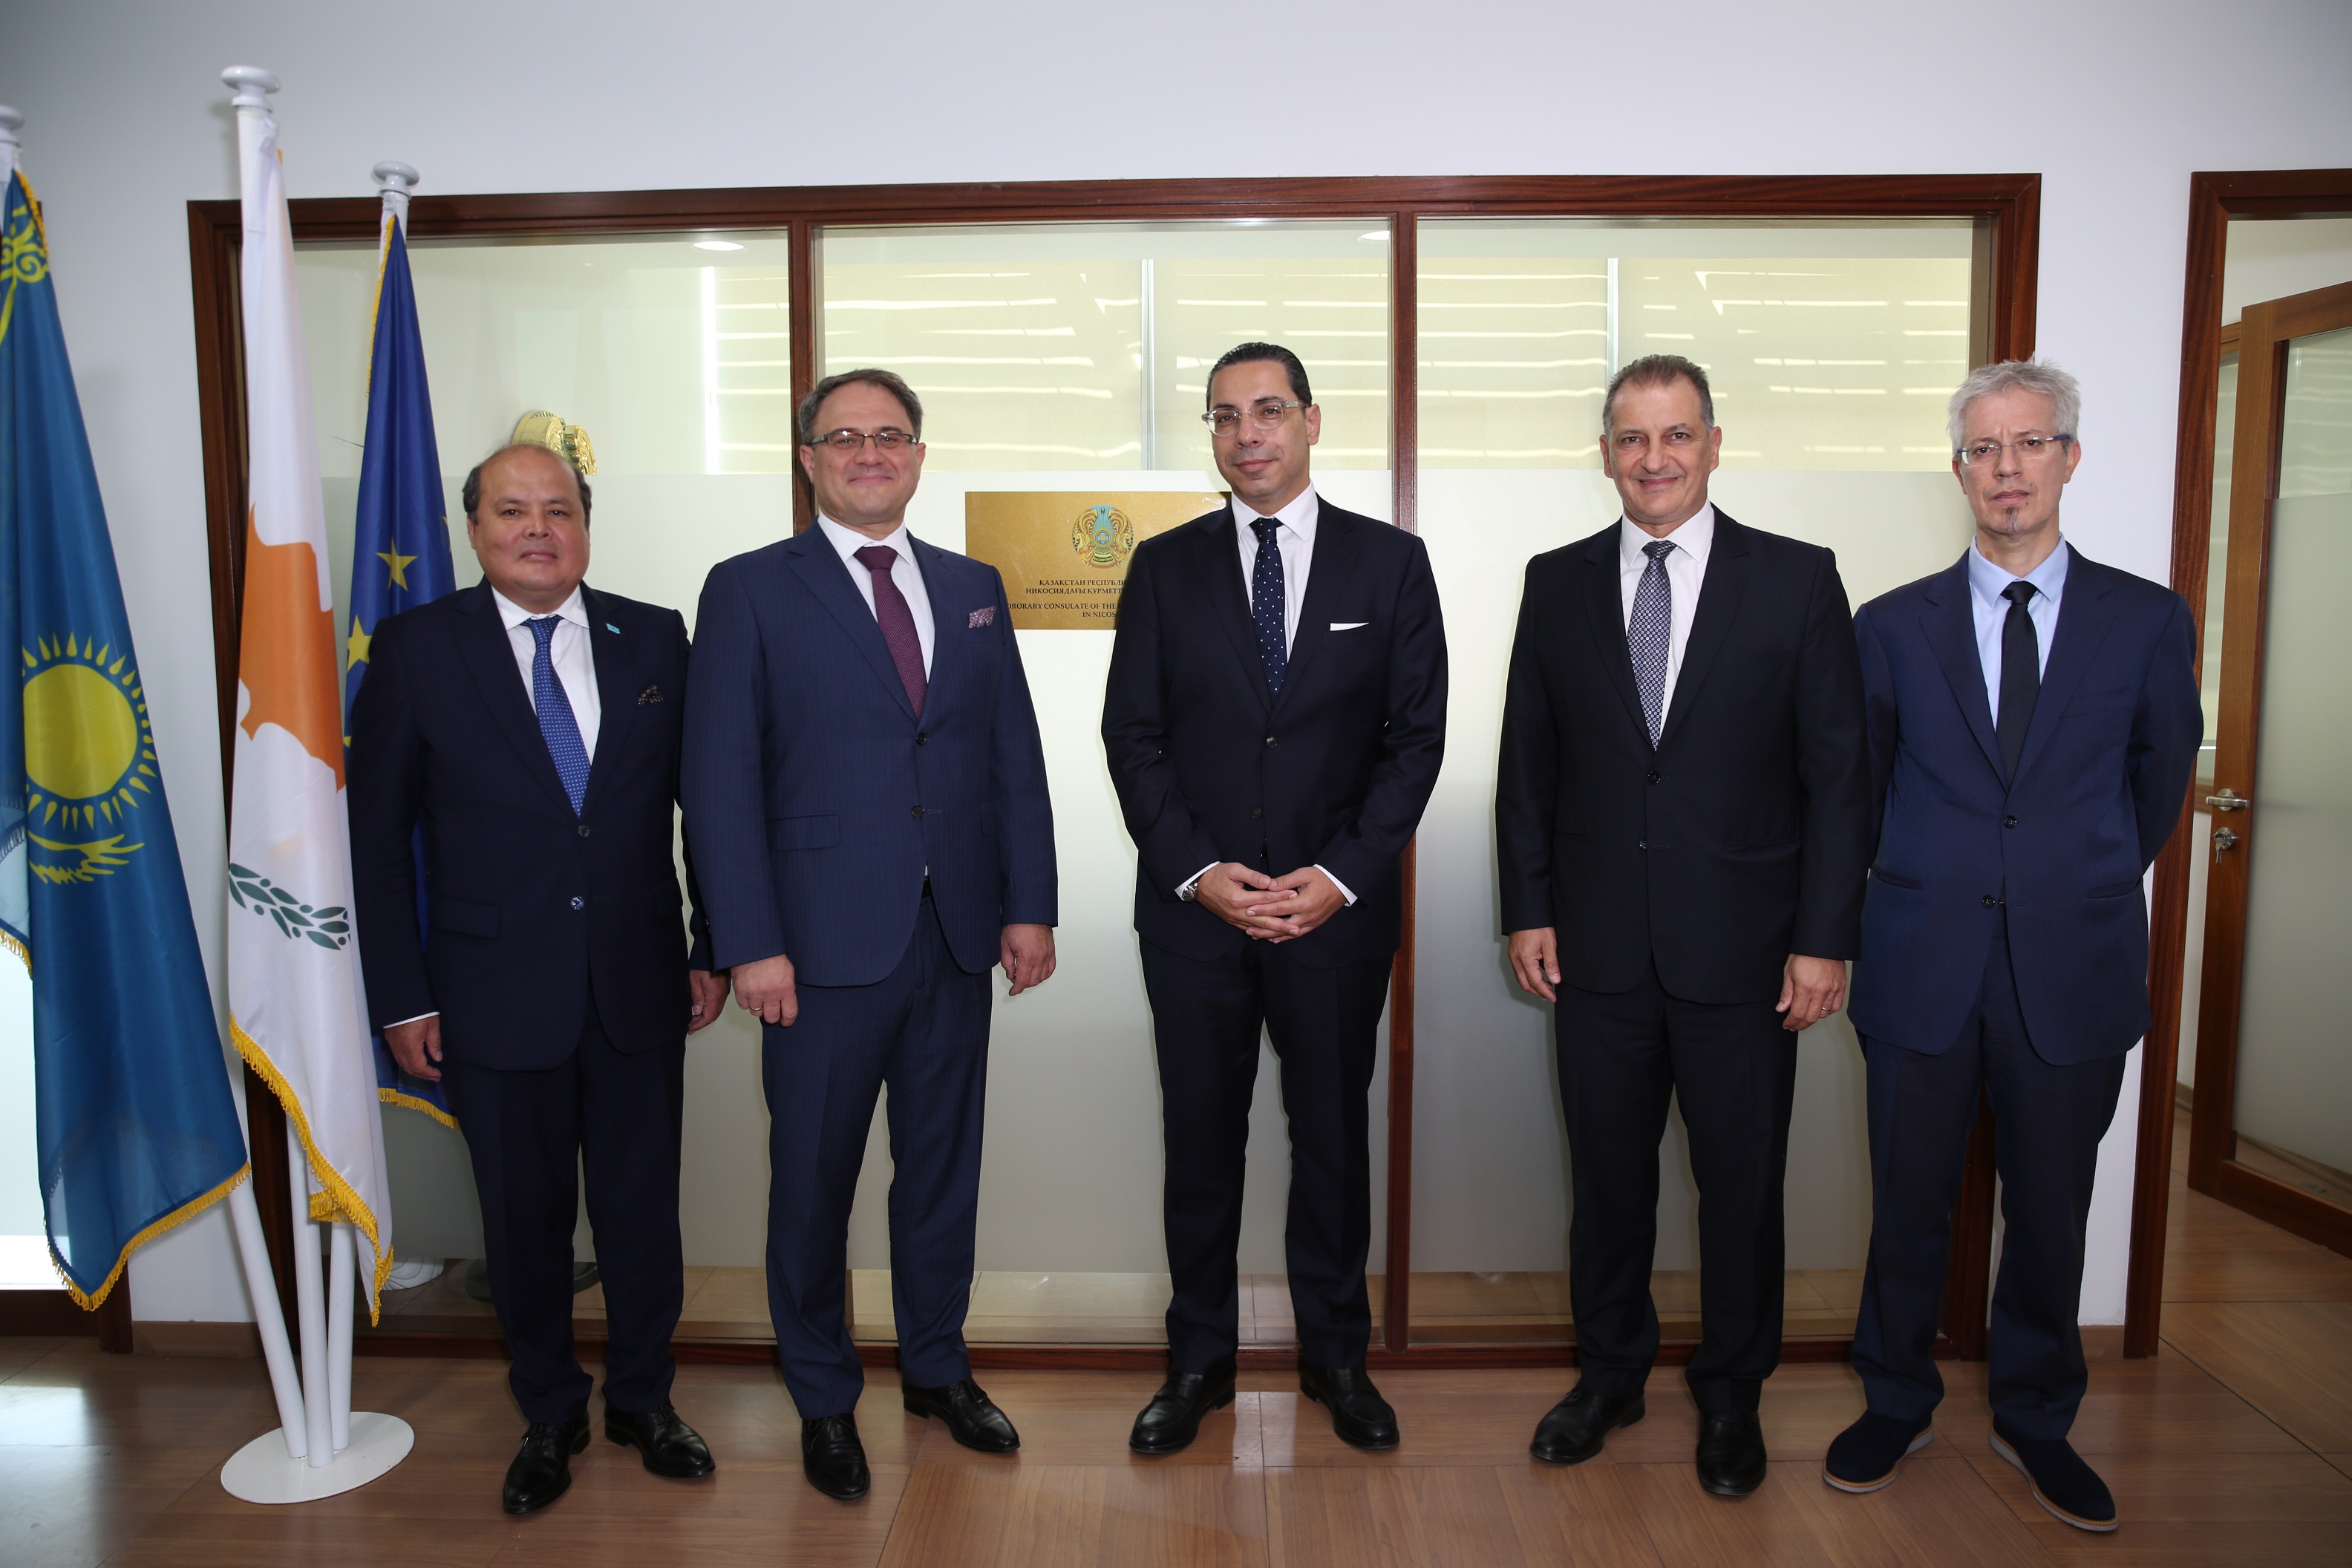 image Lakkotrypis assumes duties as consul of Kazakhstan in Cyprus